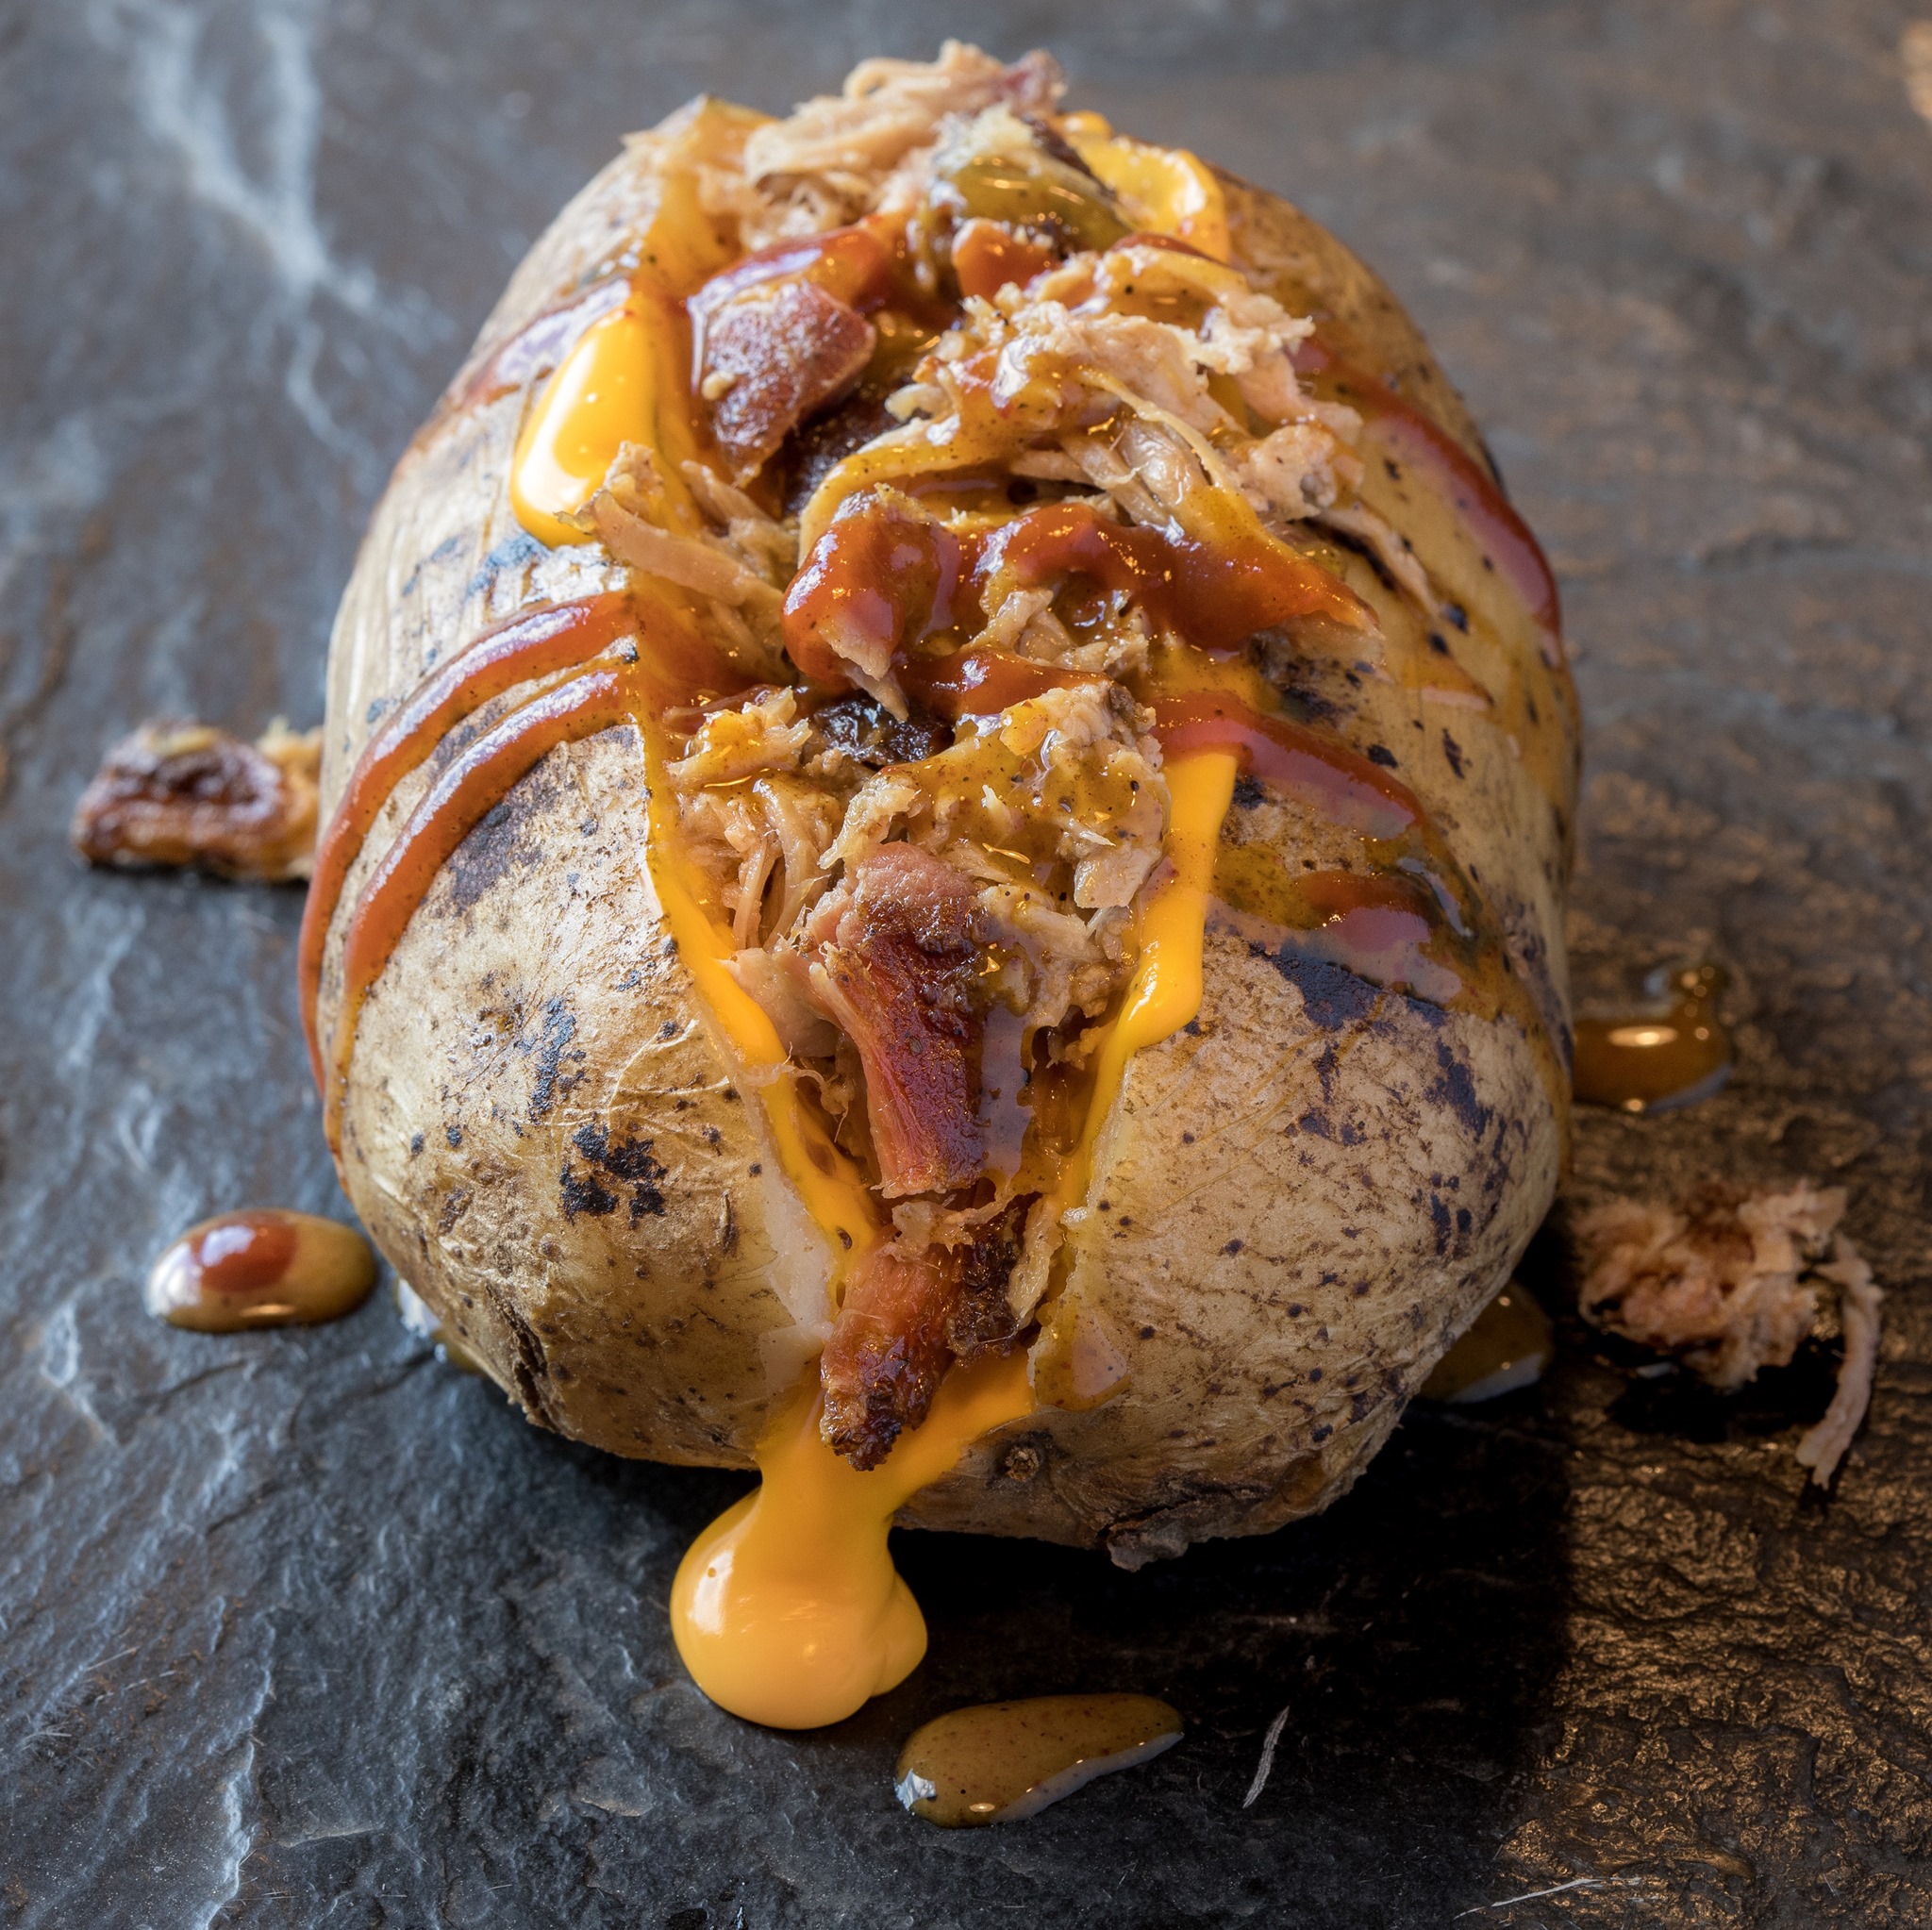 BBQ Loaded Potato from Hog-n-Bones